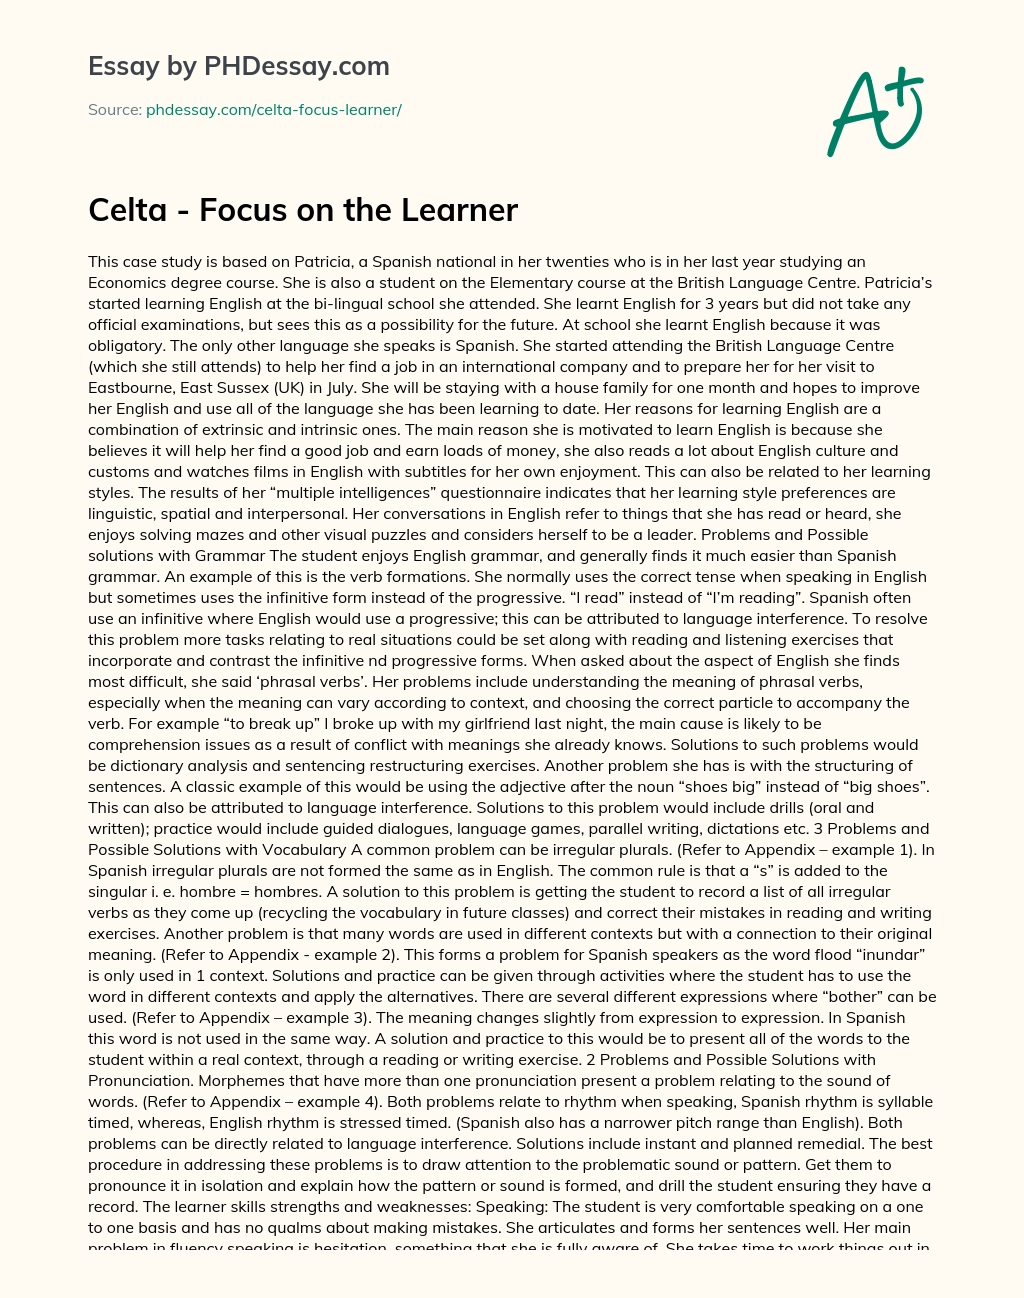 Celta – Focus on the Learner essay